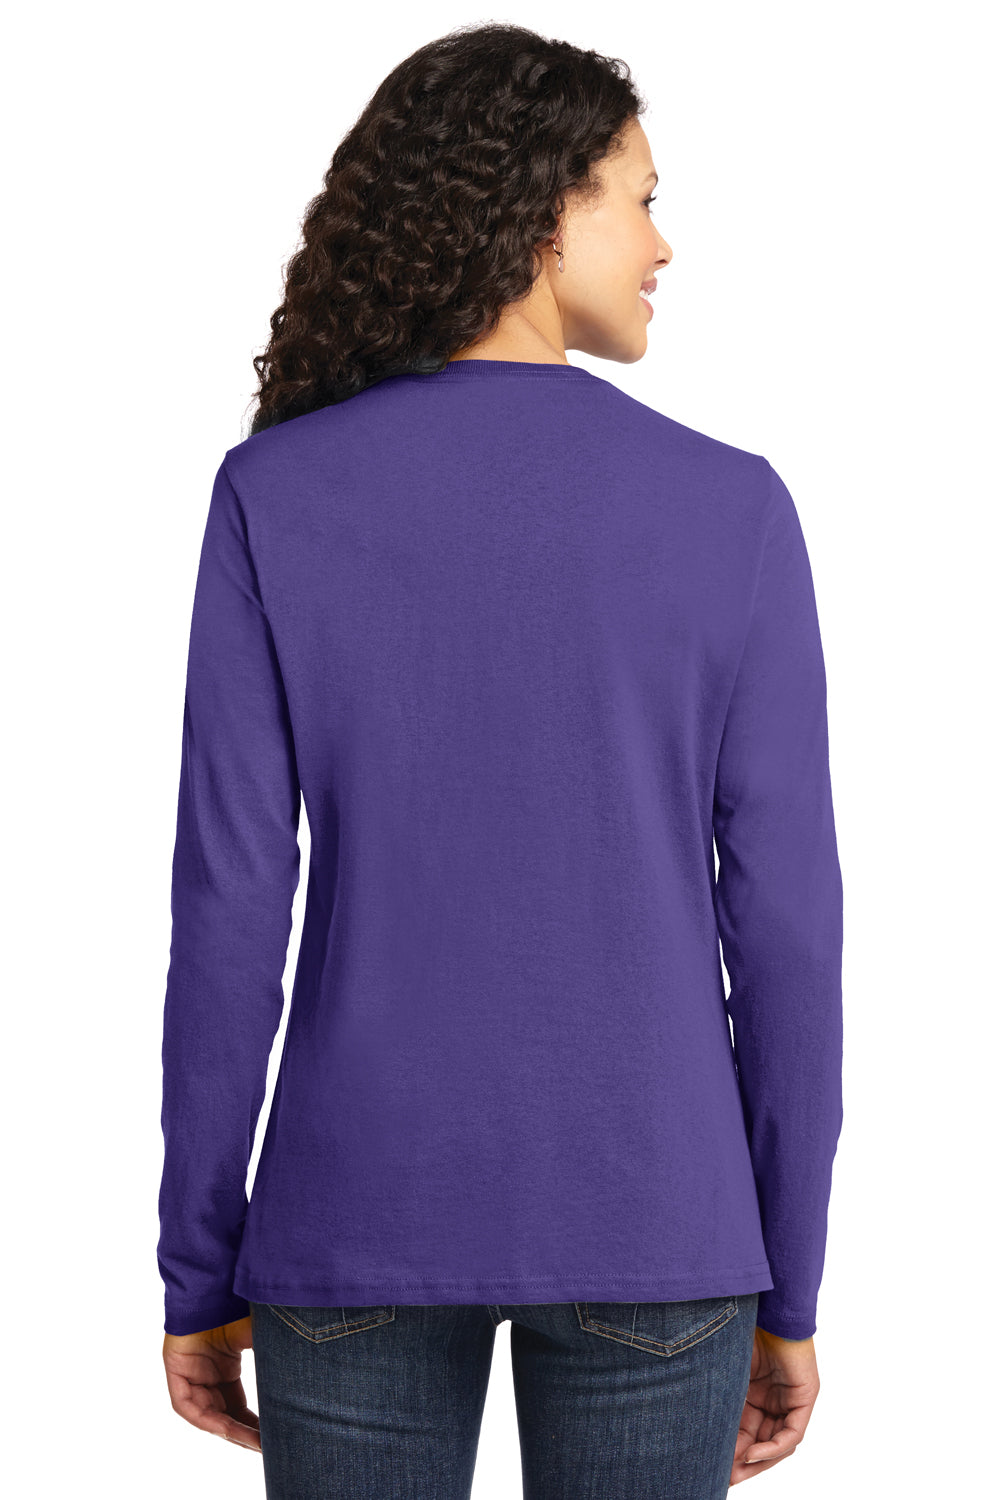 Port & Company LPC54LS Womens Core Long Sleeve Crewneck T-Shirt Purple Back